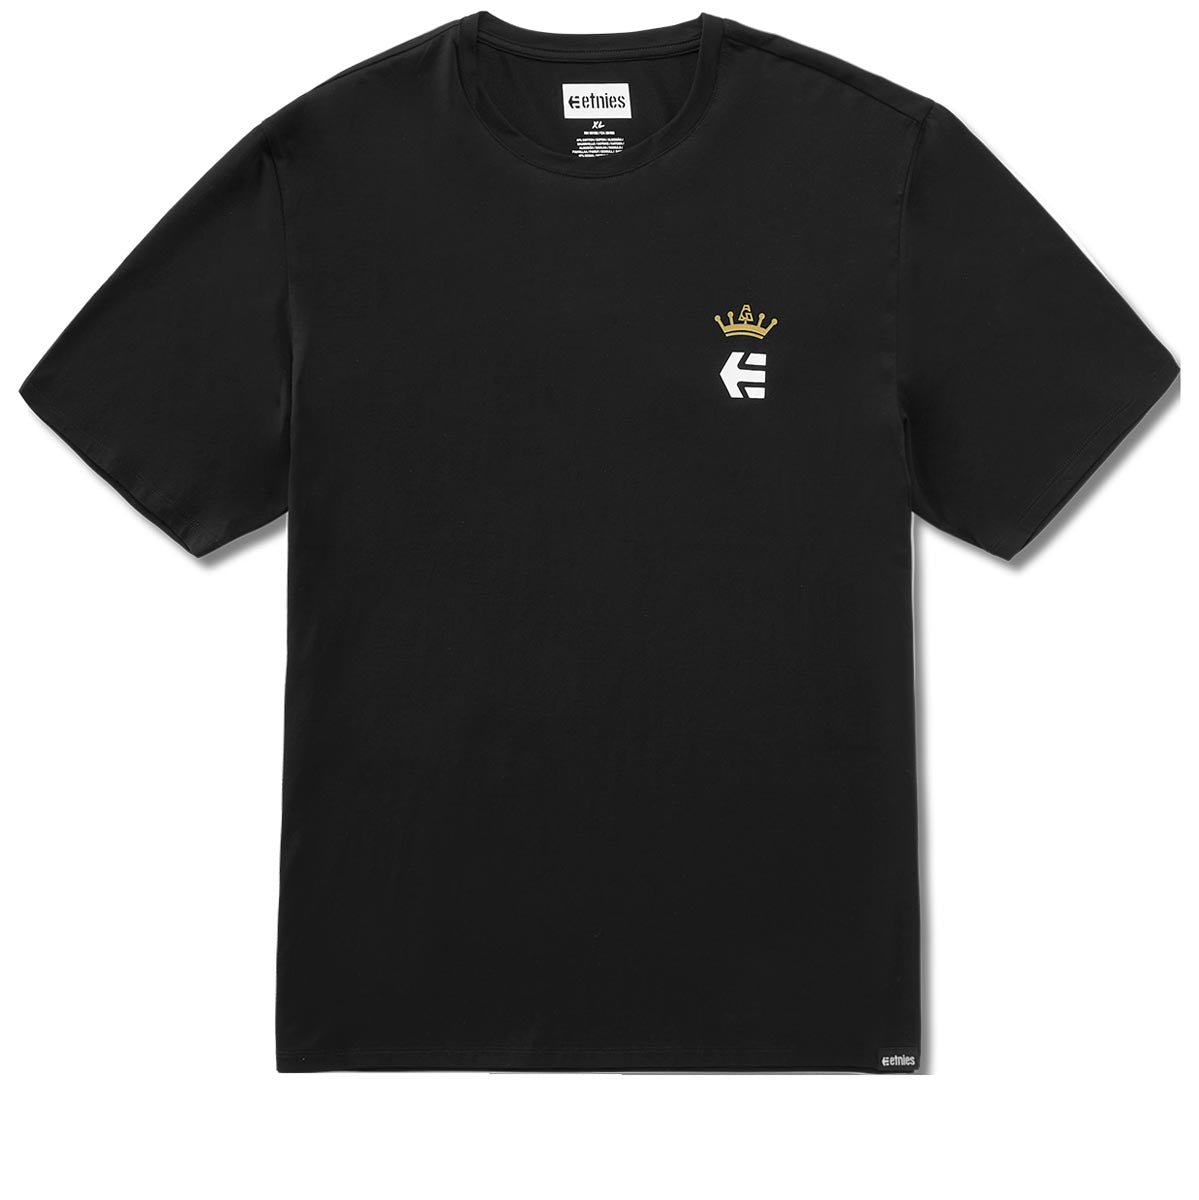 Etnies AG Tech T-Shirt - Black image 1